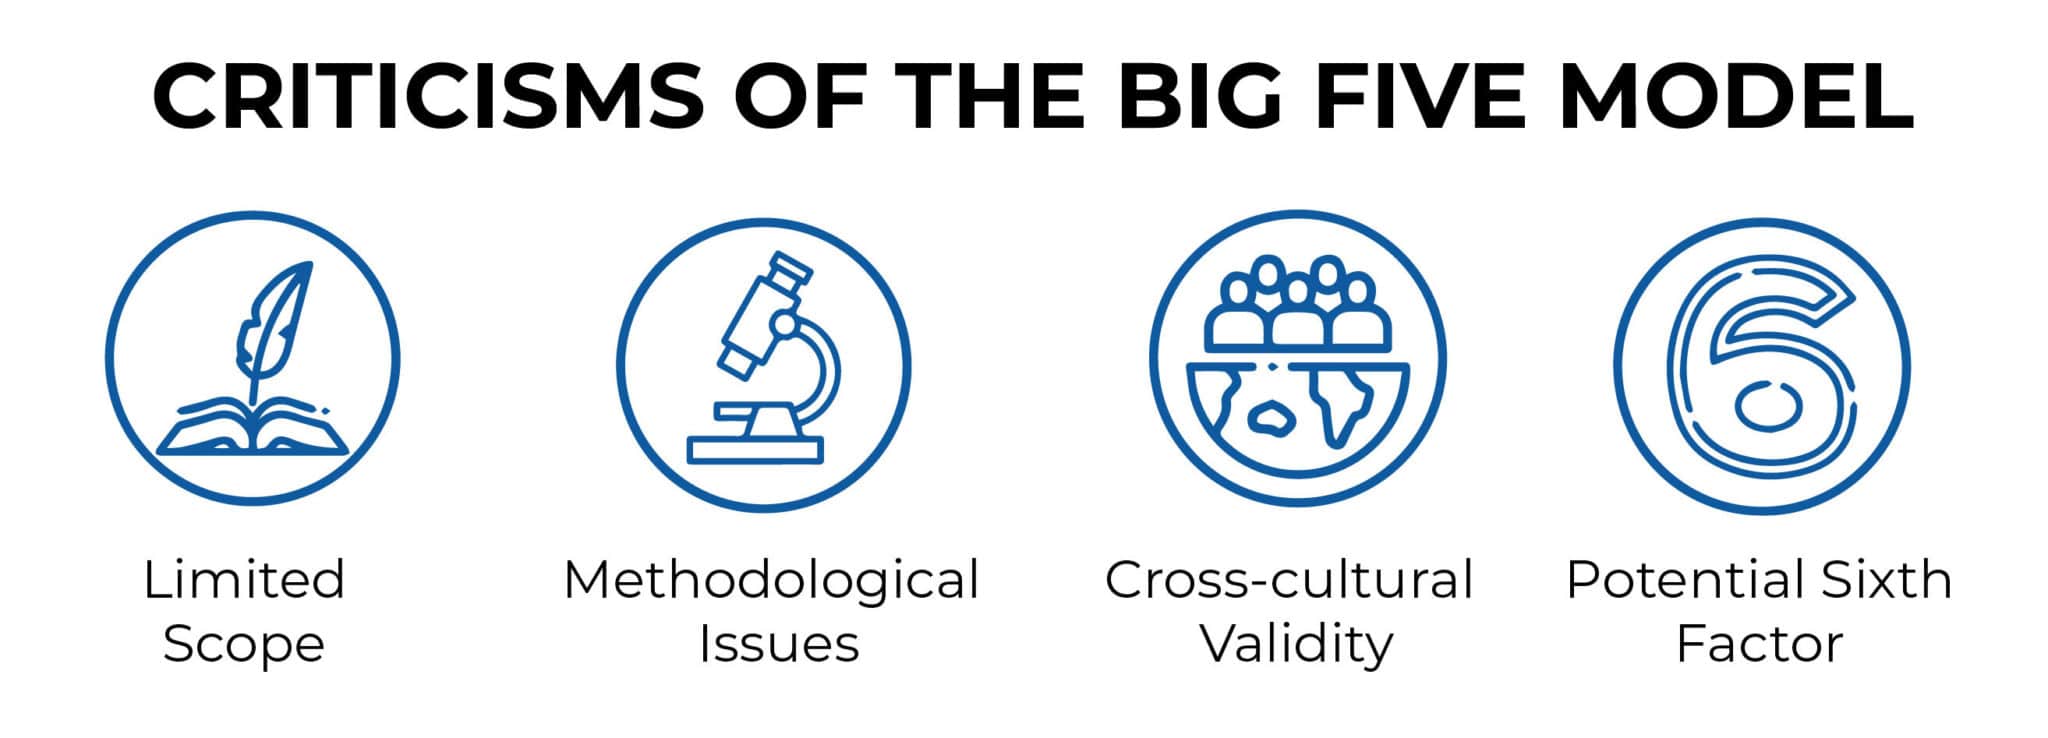 CRITICISMS OF THE BIG FIVE MODEL